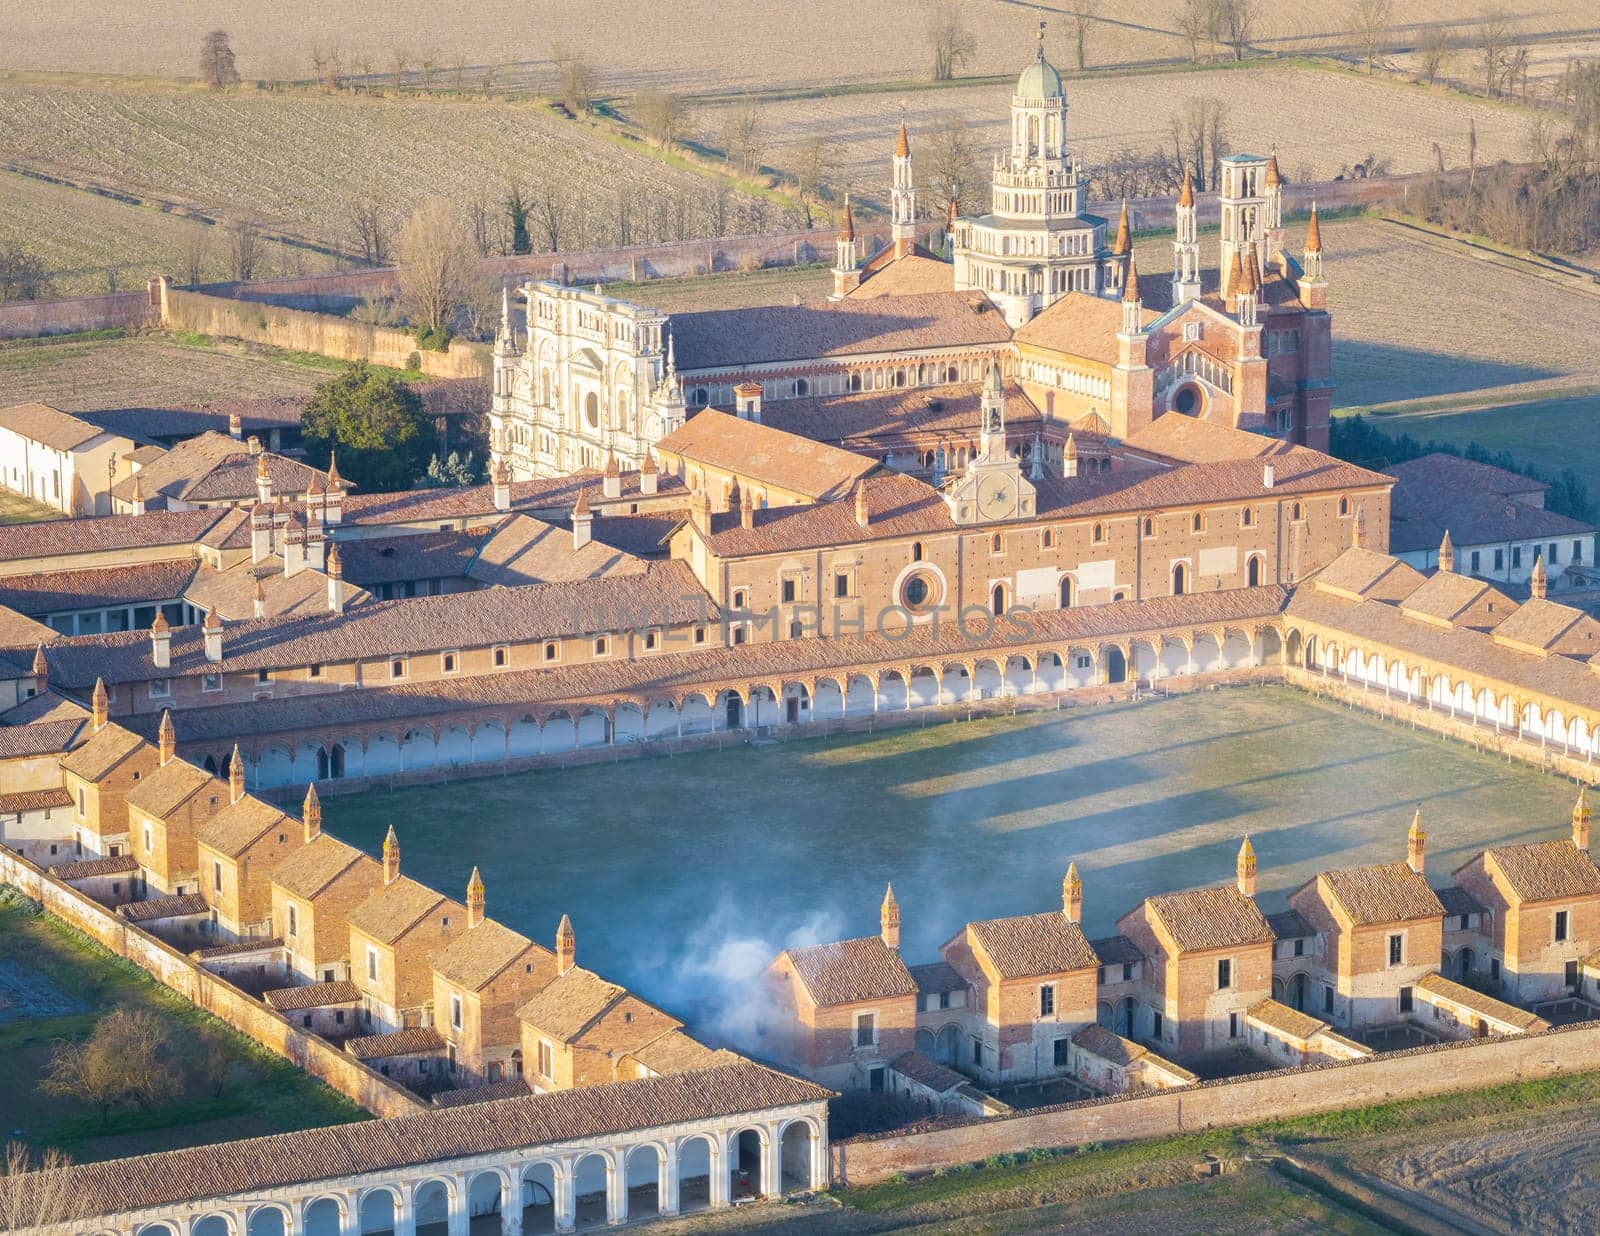 Landscape shot of Certosa of Pavia sanctuary, Pavia, Italy